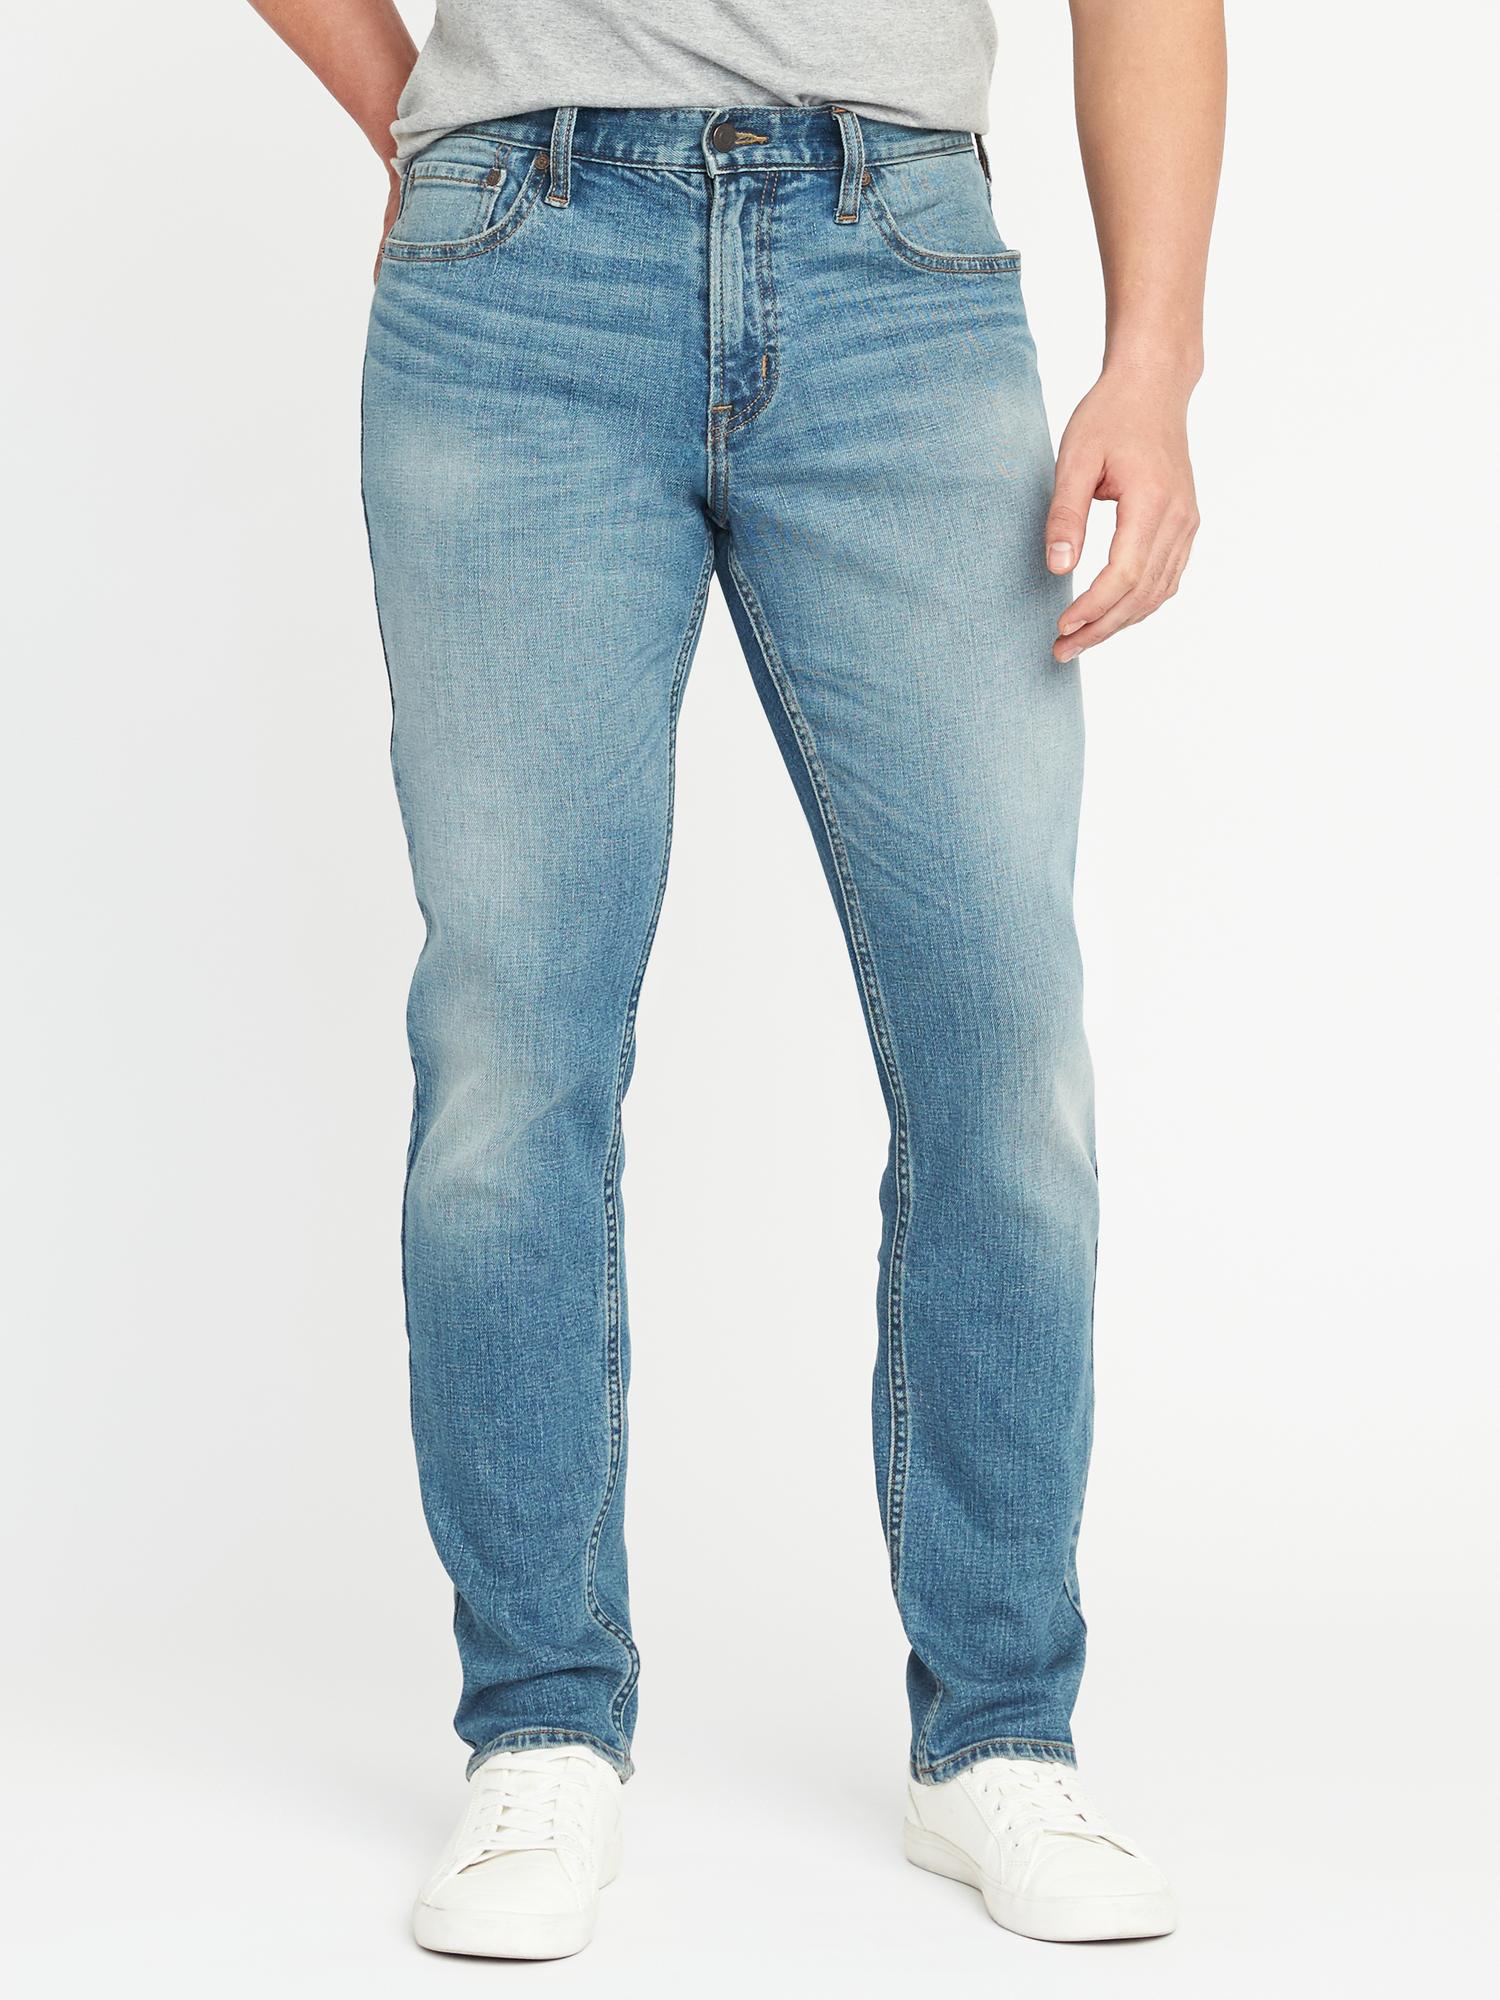 gap mens athletic jeans